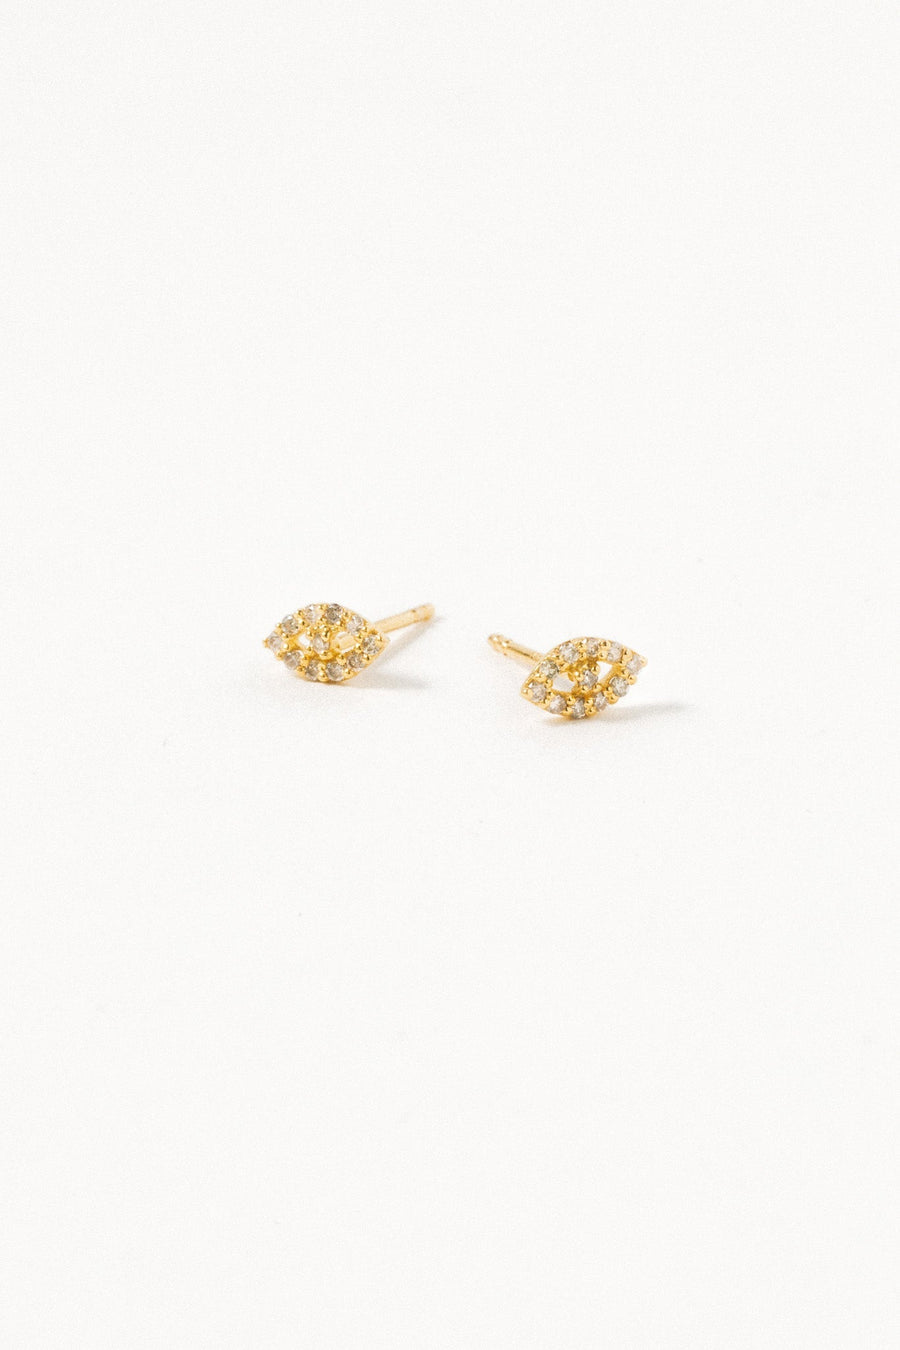 LA KAISER Jewelry Gold / Diamond 14kt Soul Vision Diamond Earrings